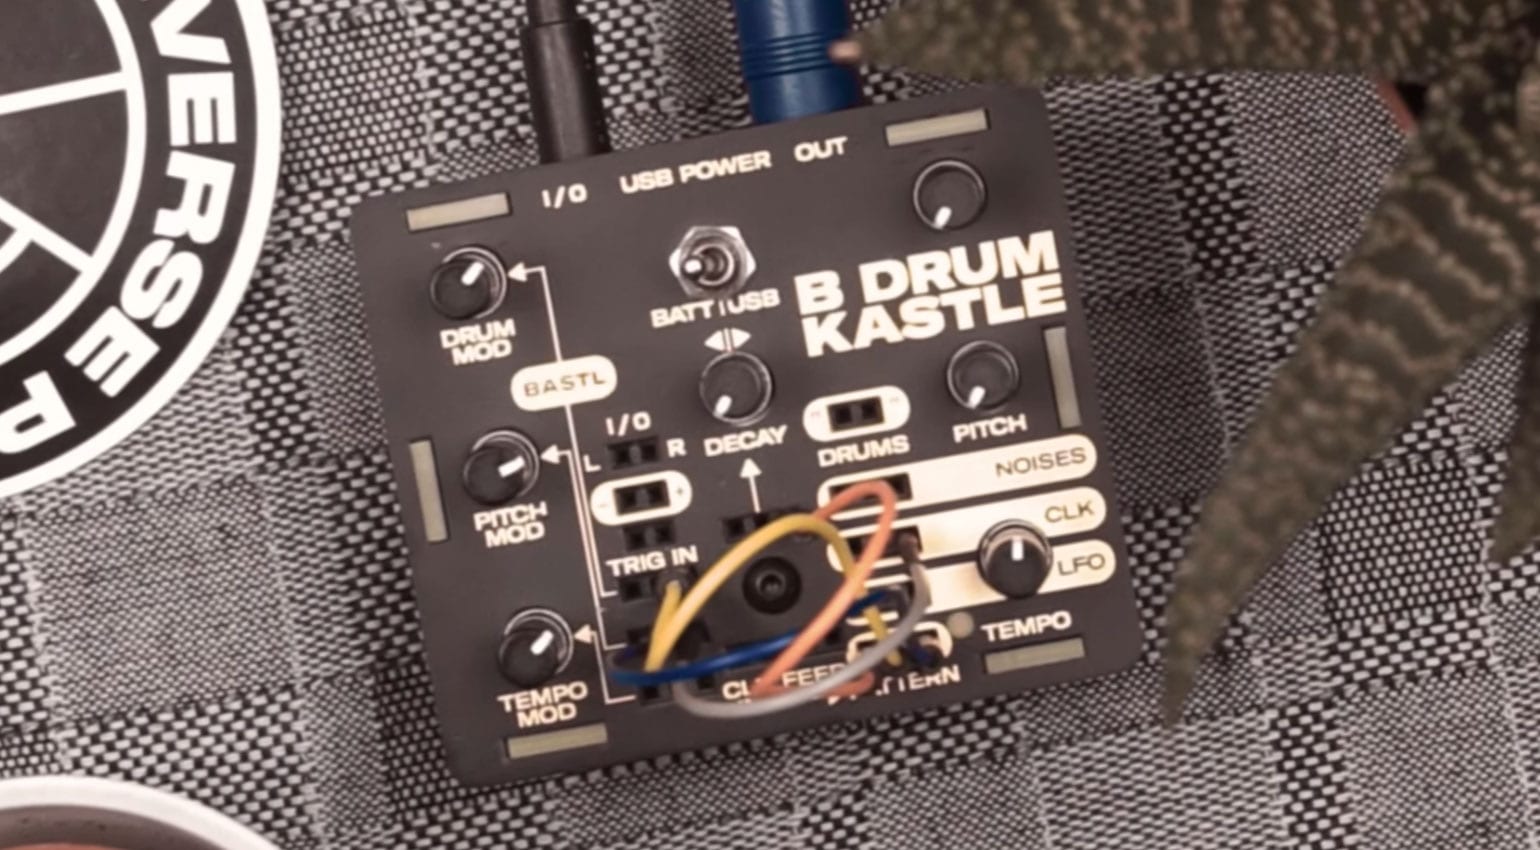 Kastle Drum: mini patchable industrial glitch machine from Bastl Instruments  - gearnews.com